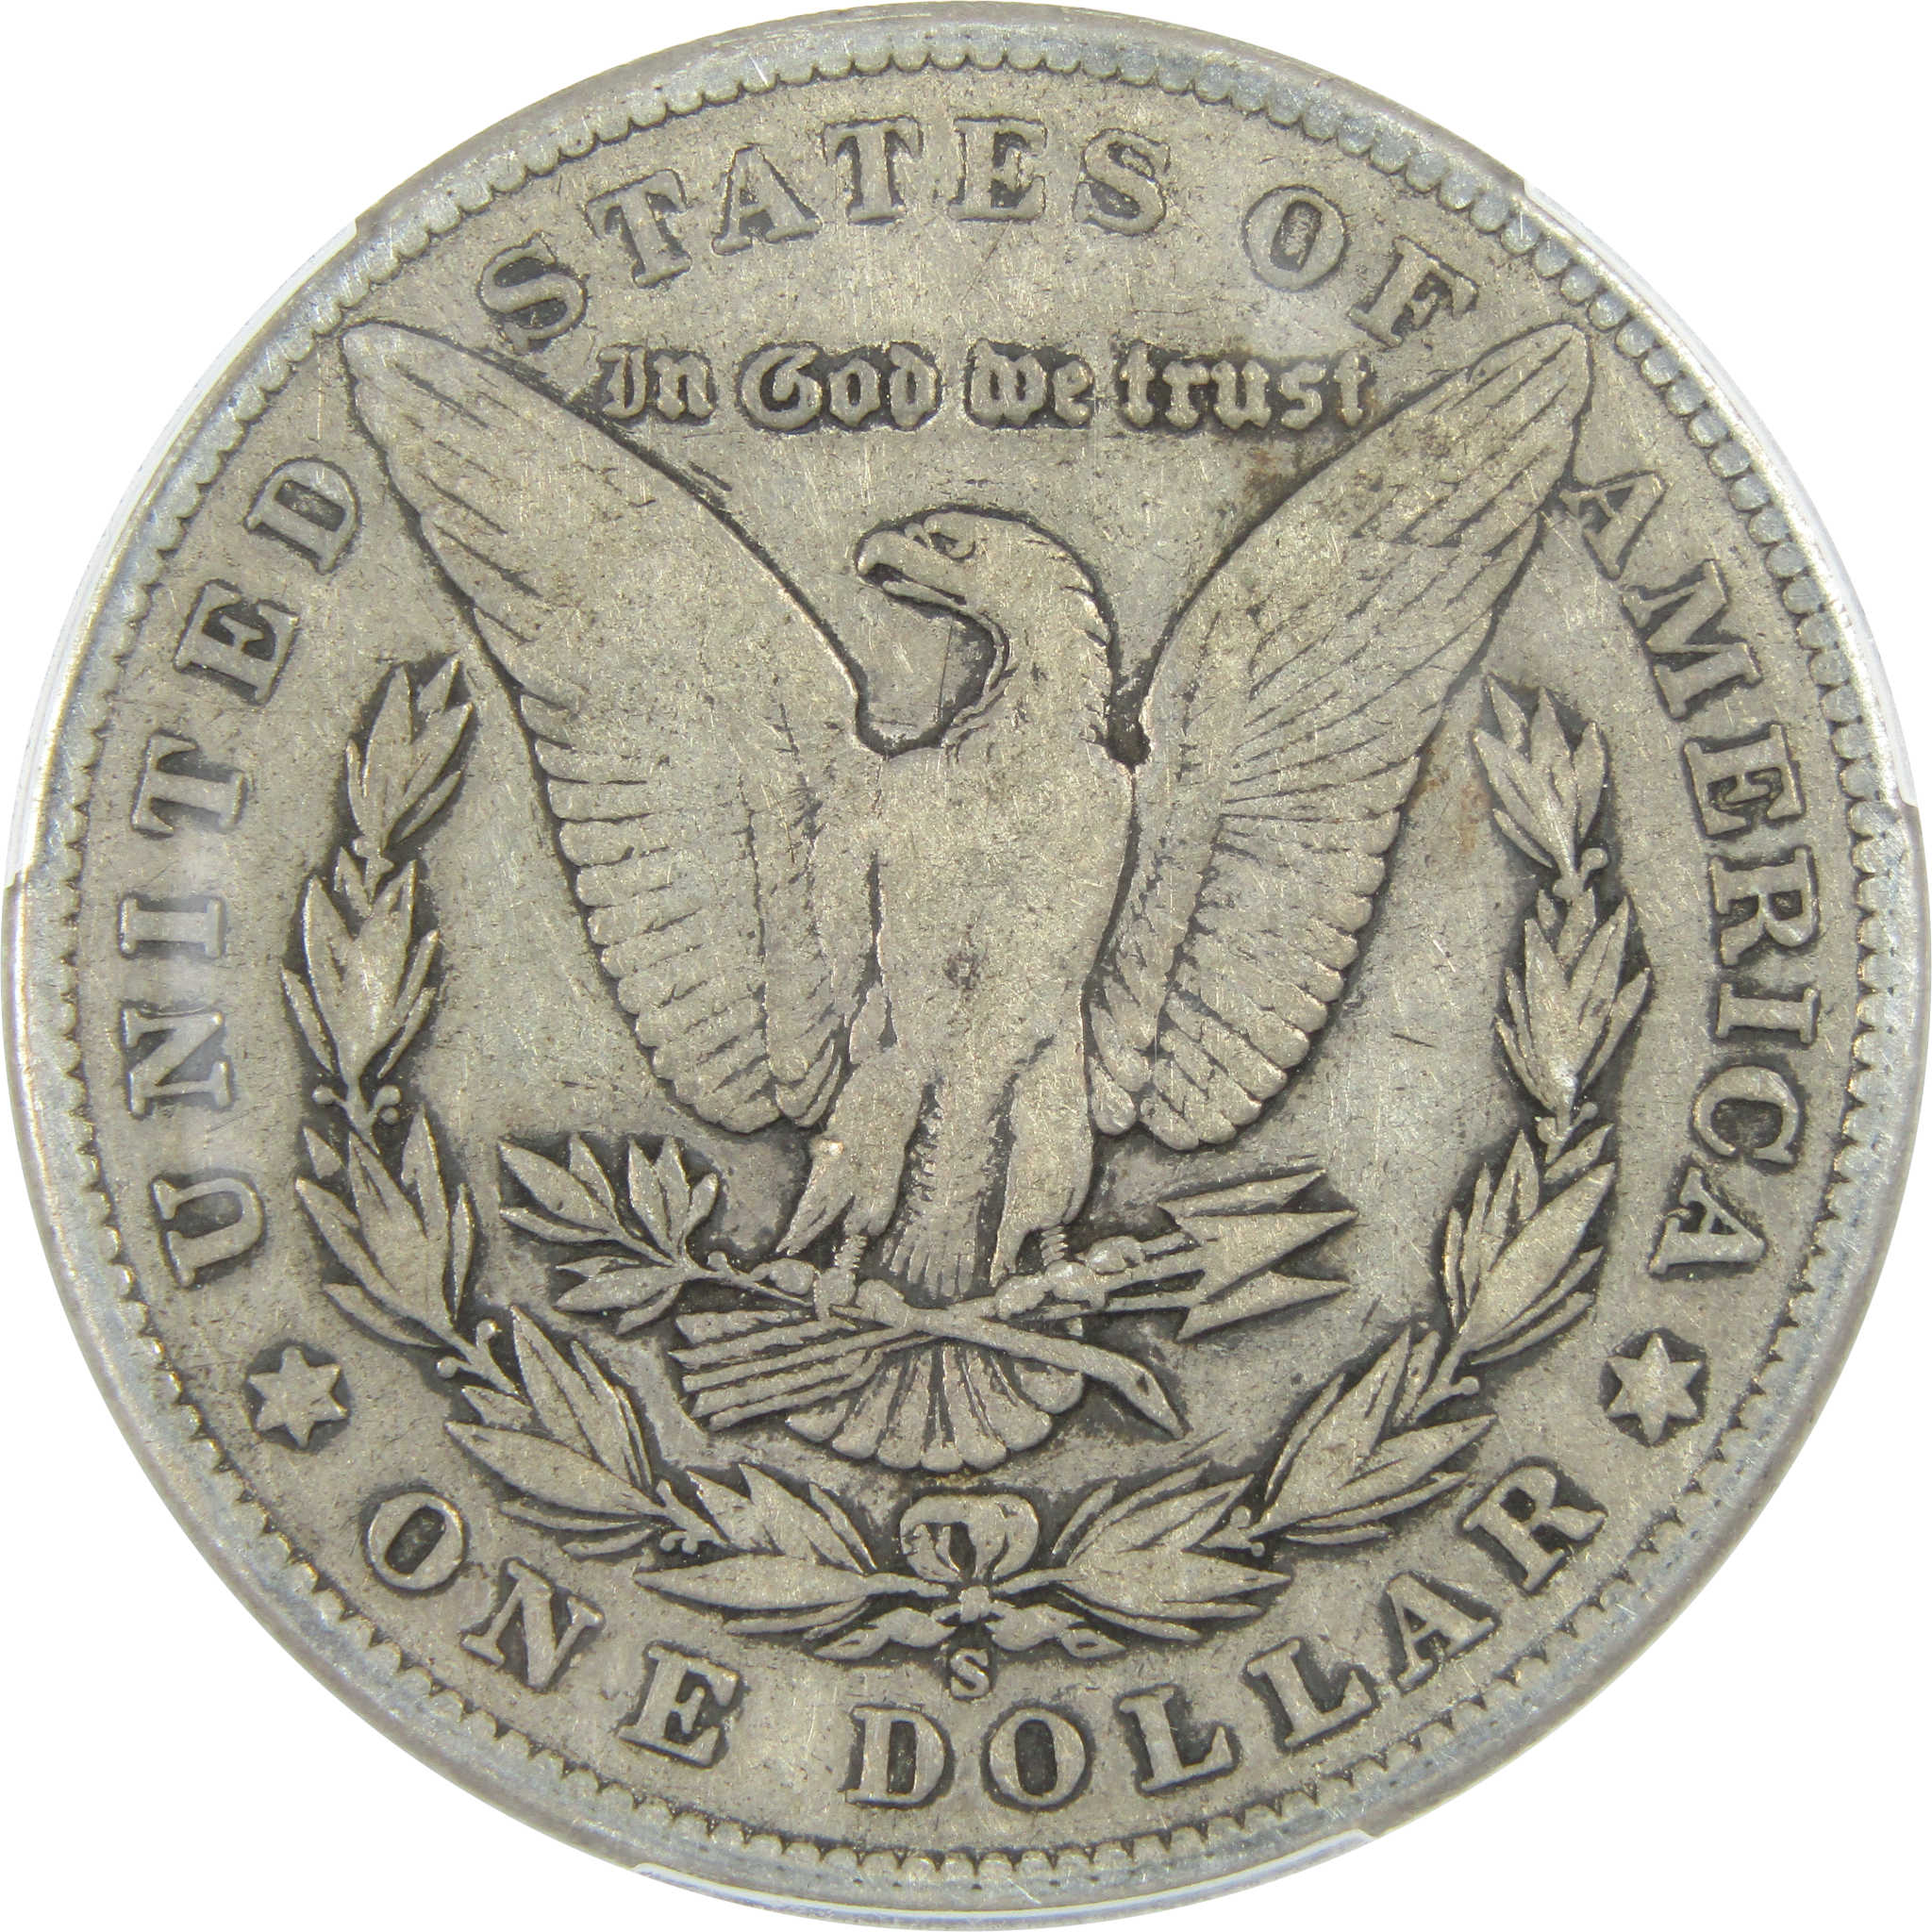 1904 S Morgan Dollar F 12 PCGS Silver $1 Coin SKU:I13137 - Morgan coin - Morgan silver dollar - Morgan silver dollar for sale - Profile Coins &amp; Collectibles